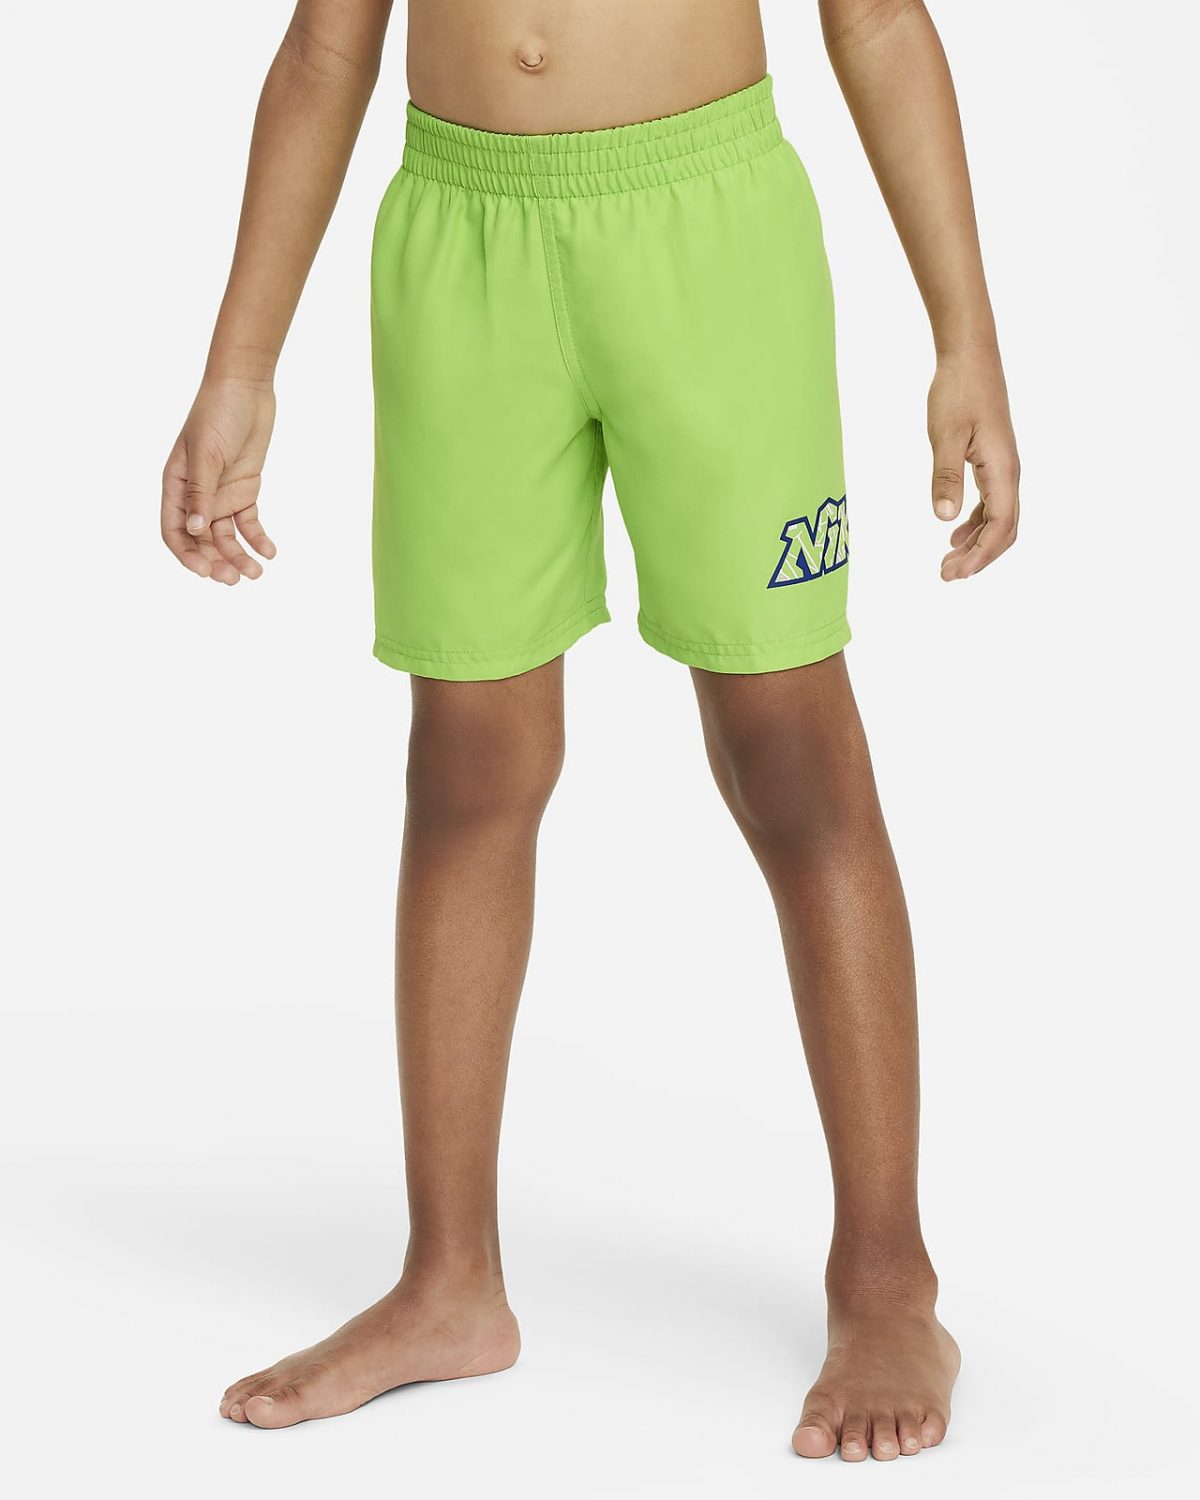 Детские шорты Nike Swim Jumble фото